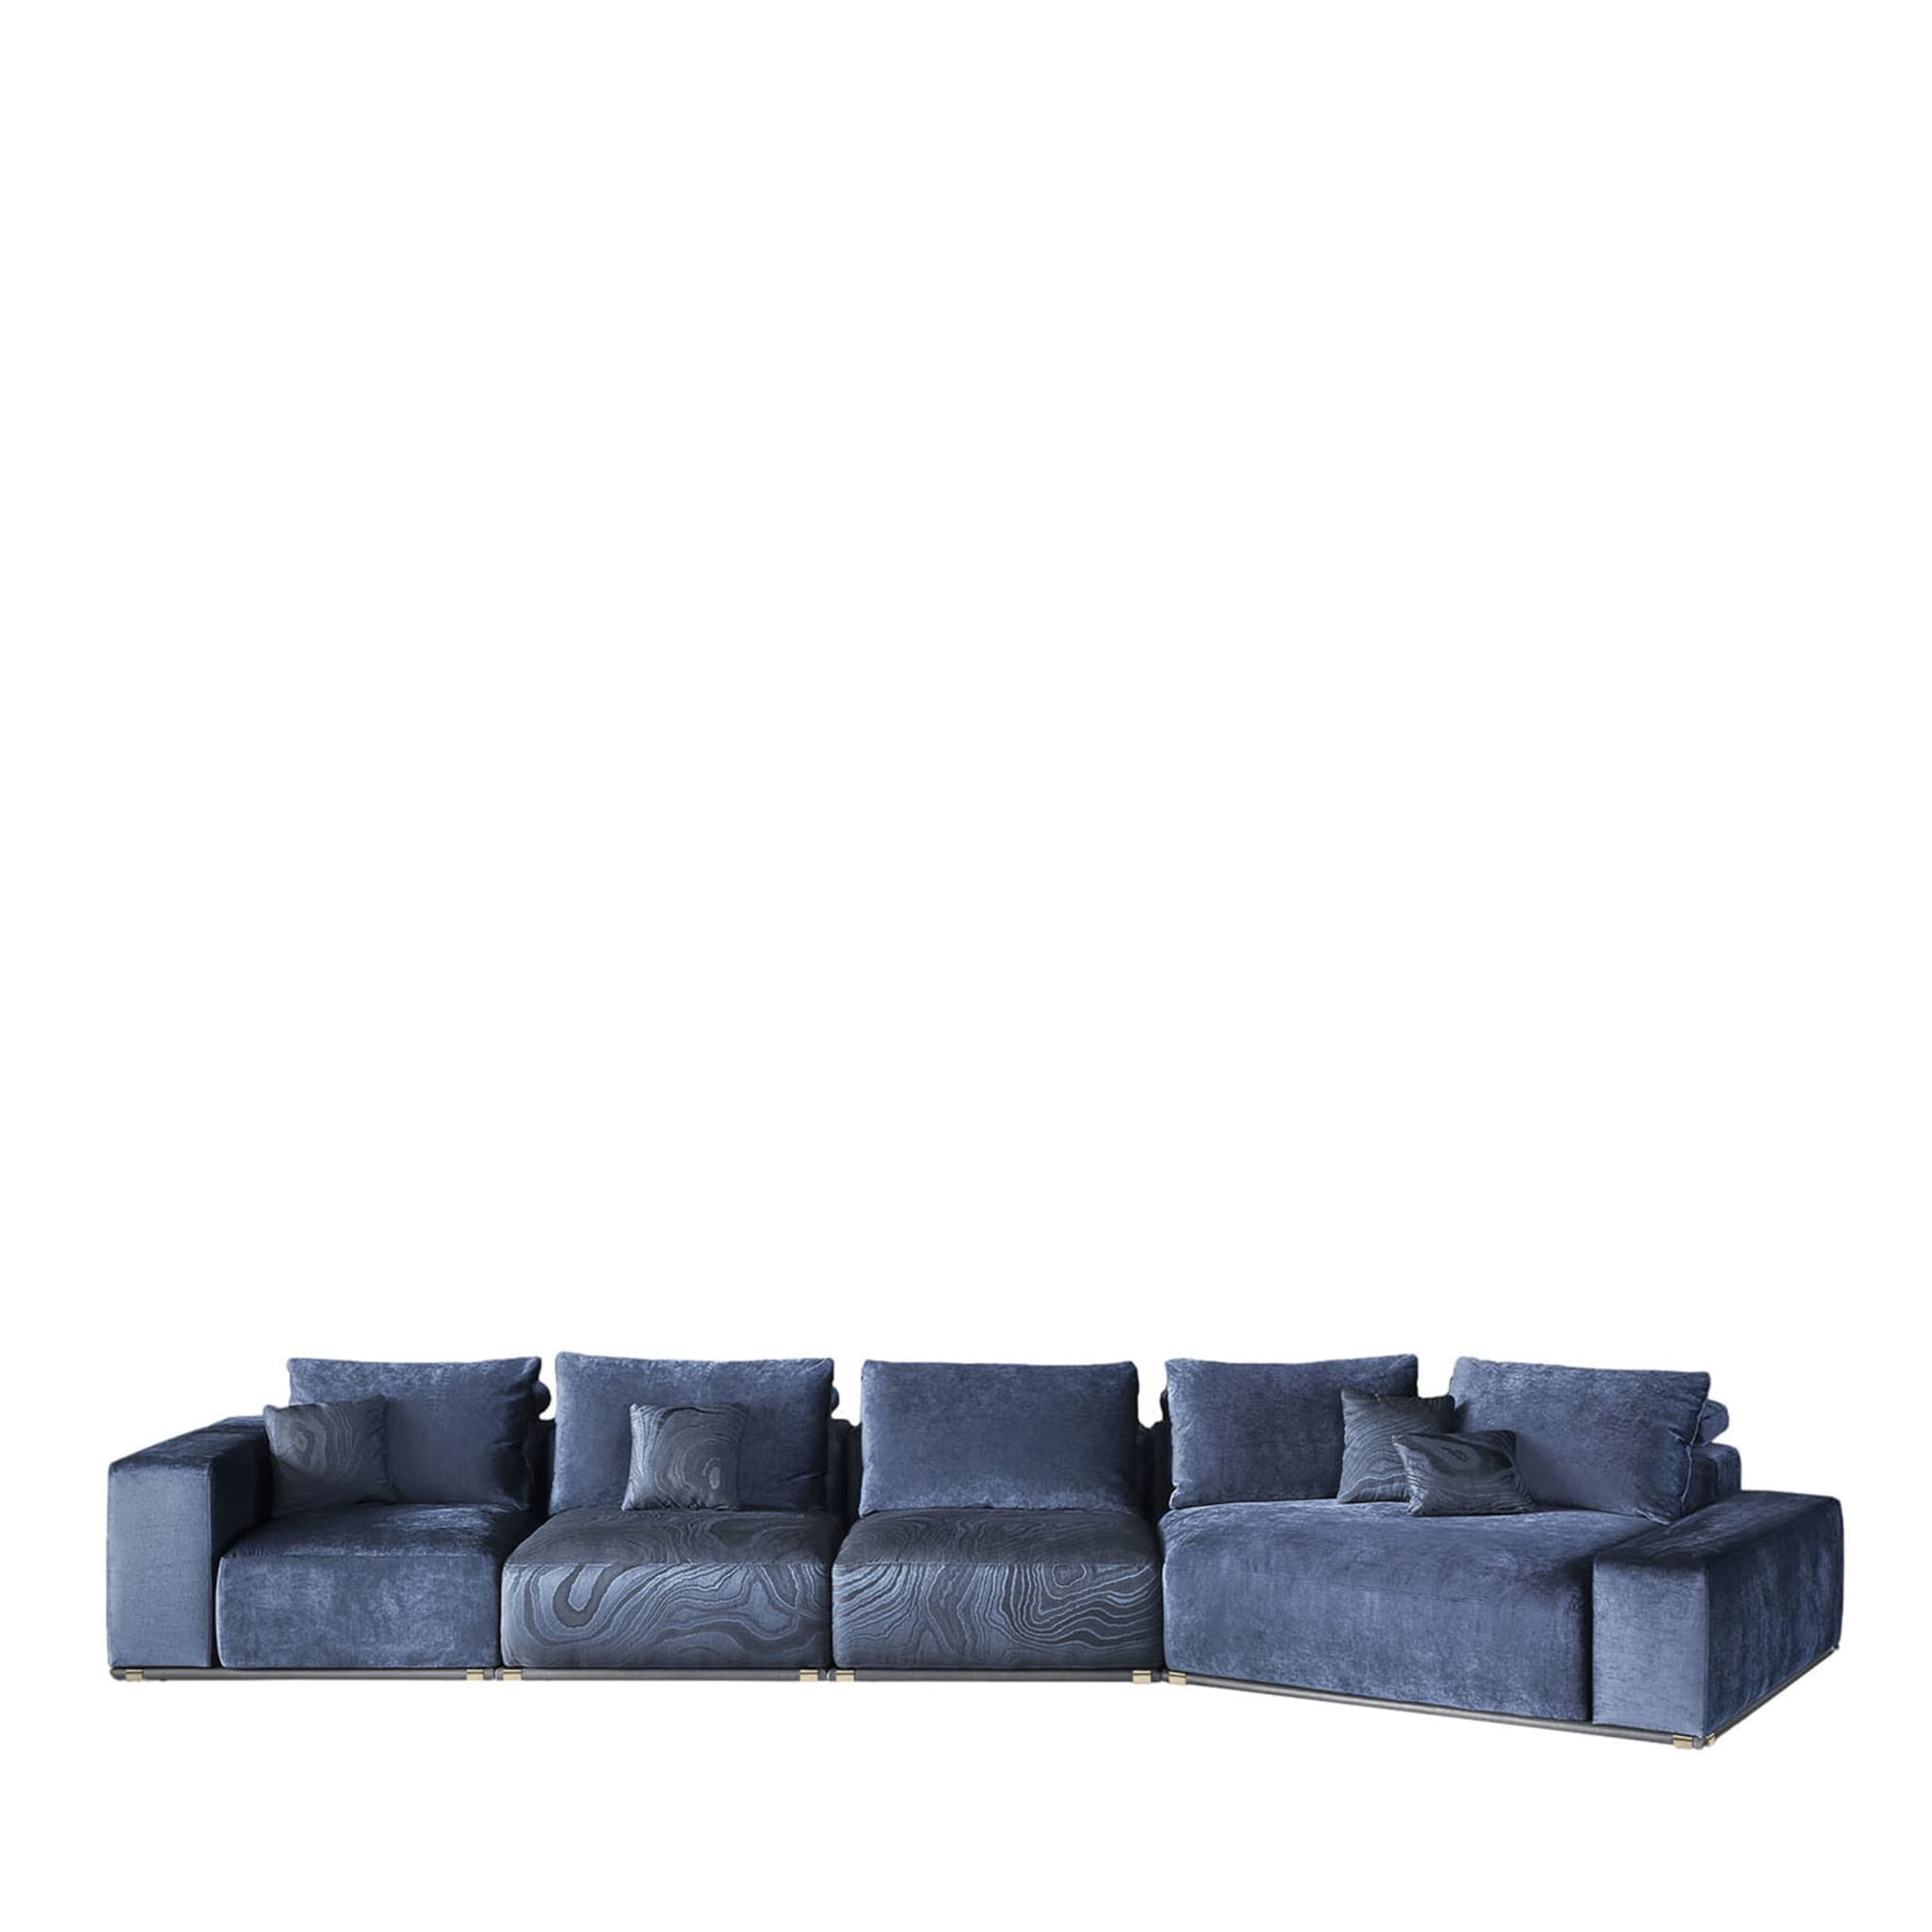 Zeno Modular Blue Sofa #2 - Main view